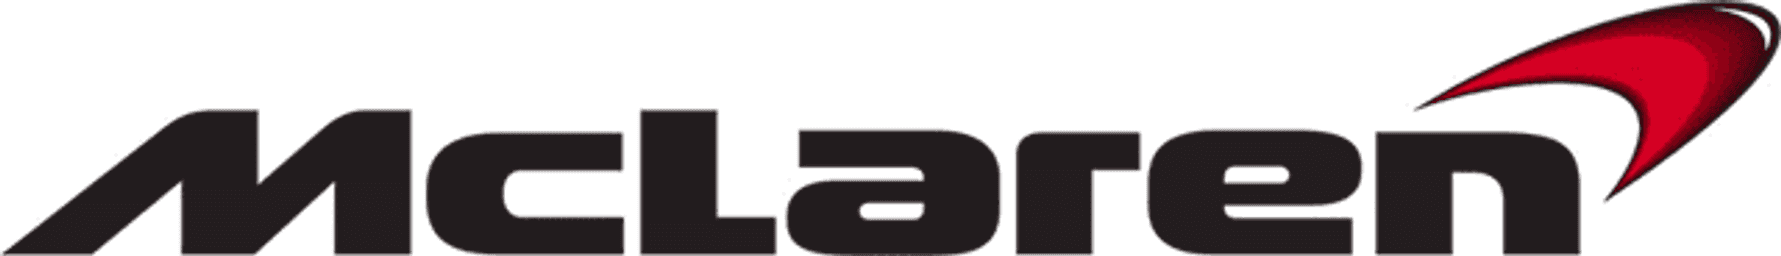 Brand MCLAREN logo